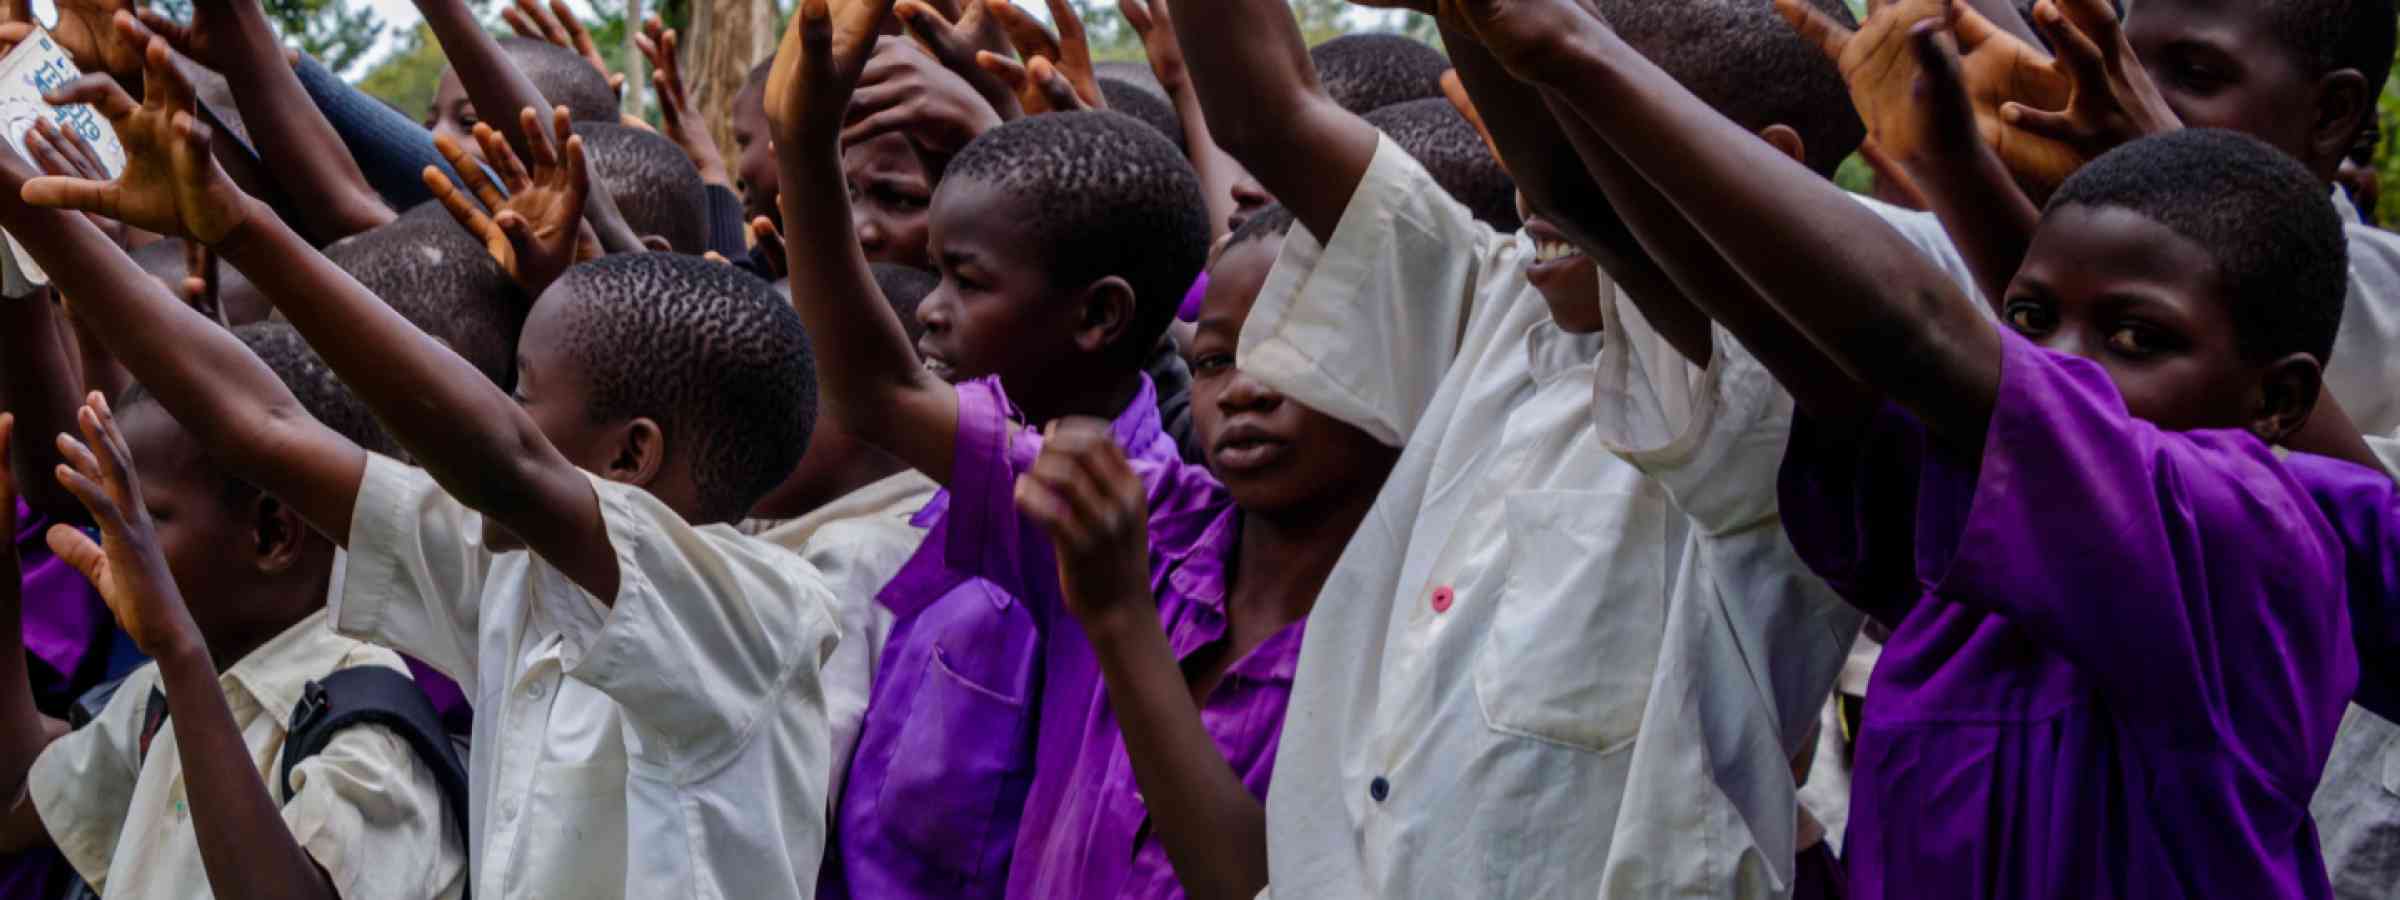 School chlidren at a primary school in Uganda lifting their hands.